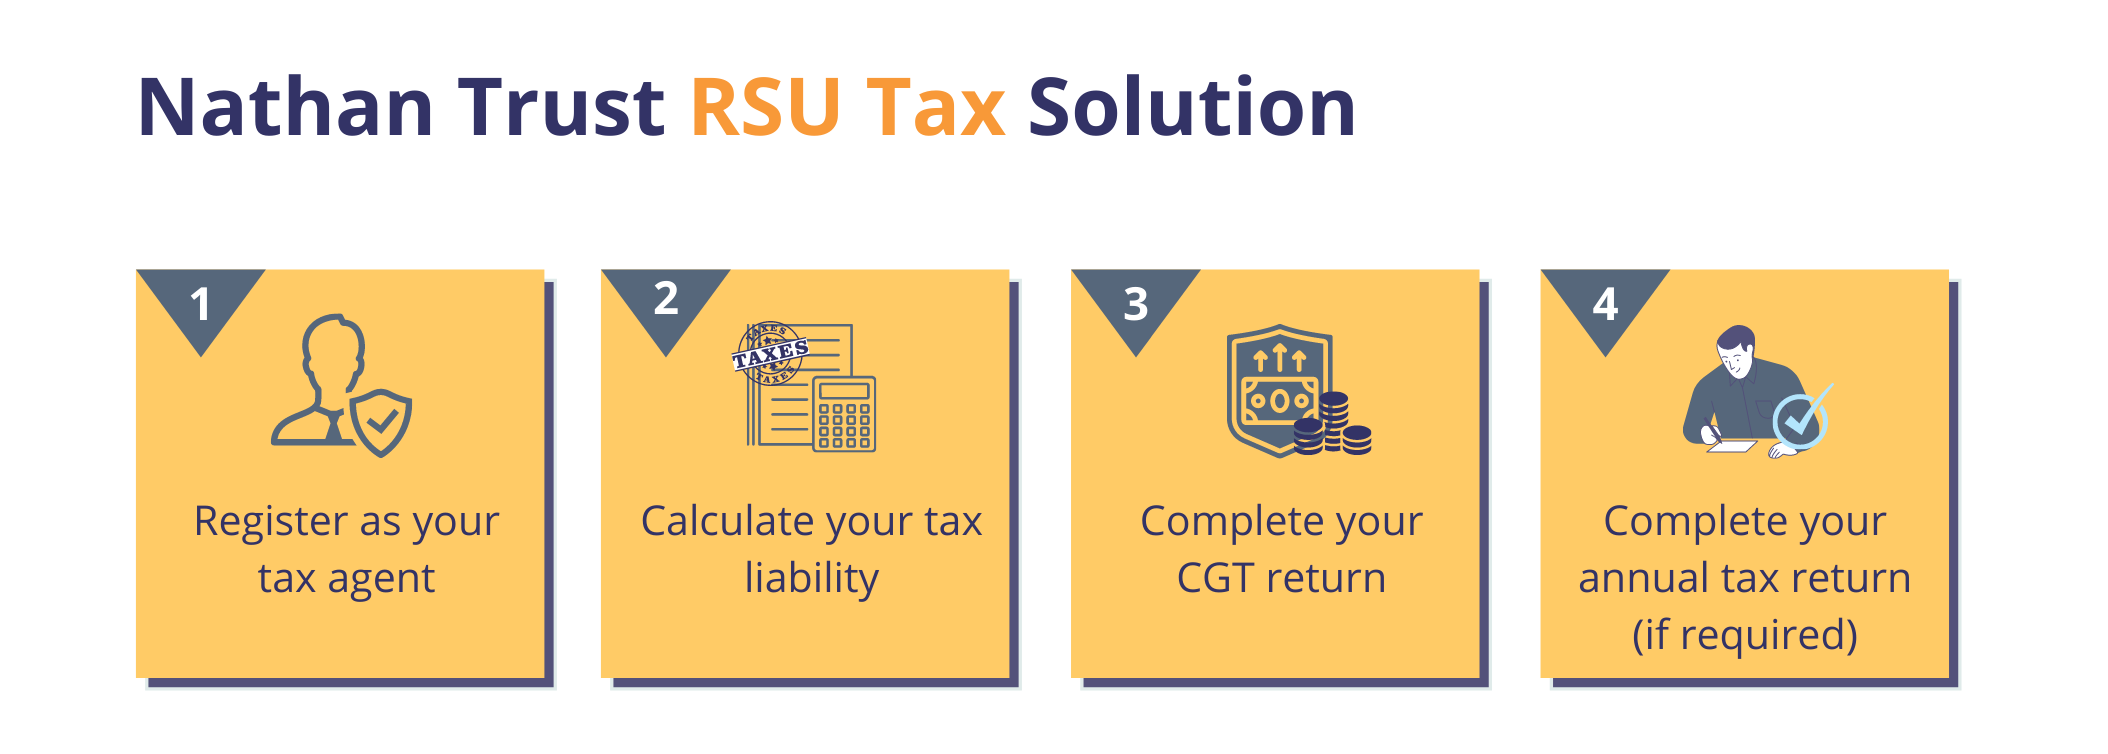 Nathan Trust RSU Tax solution